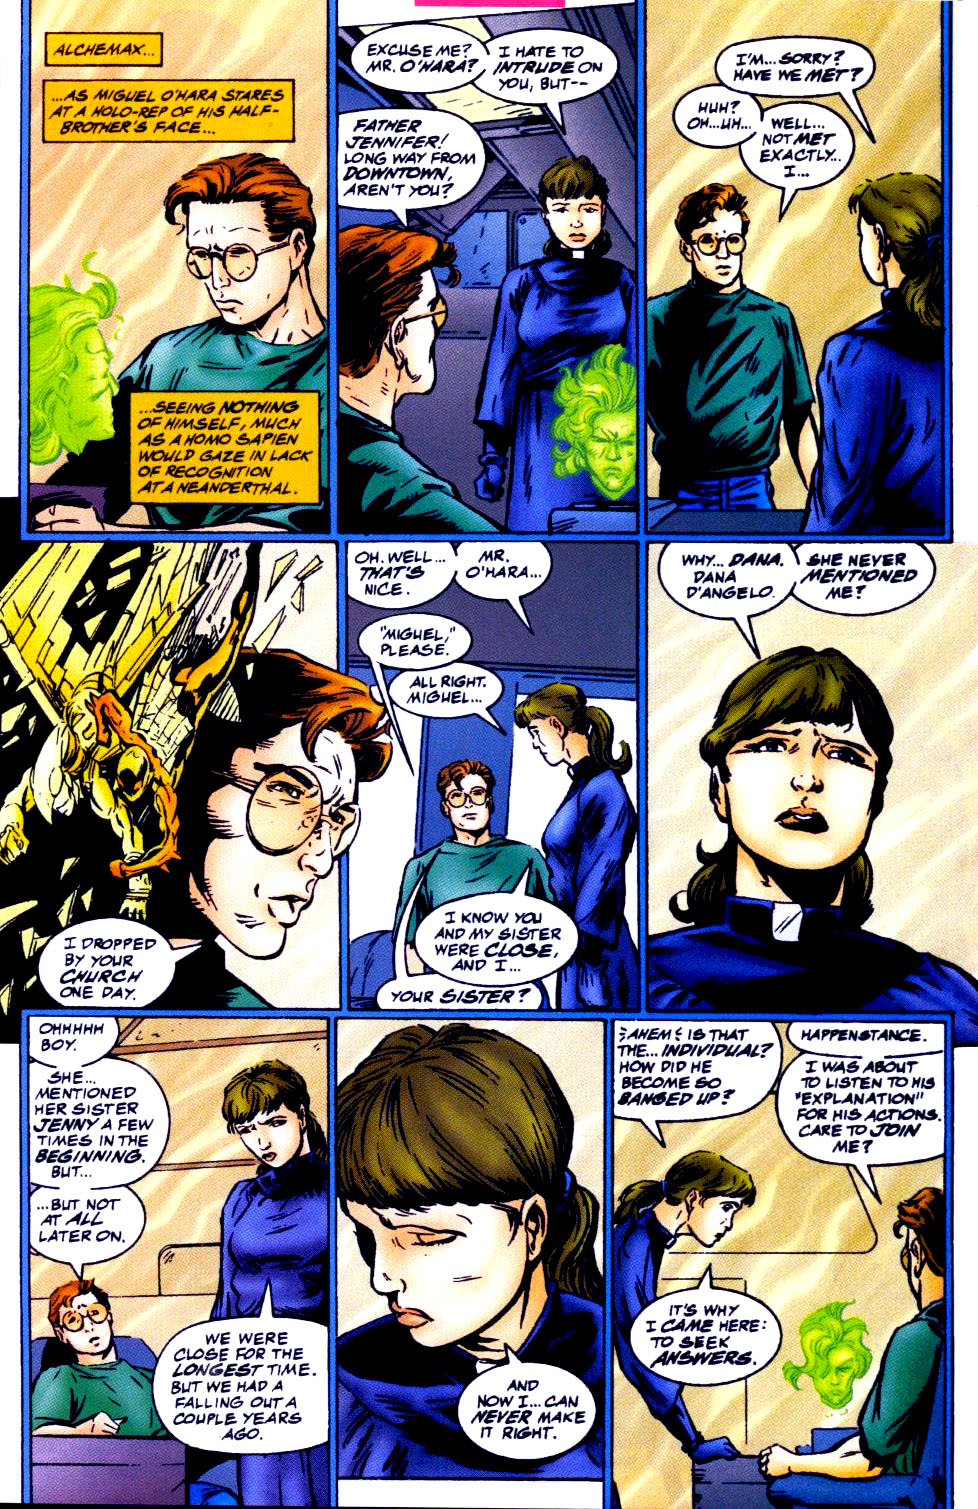 Spider-Man 2099 (1992) issue 39 - Page 16